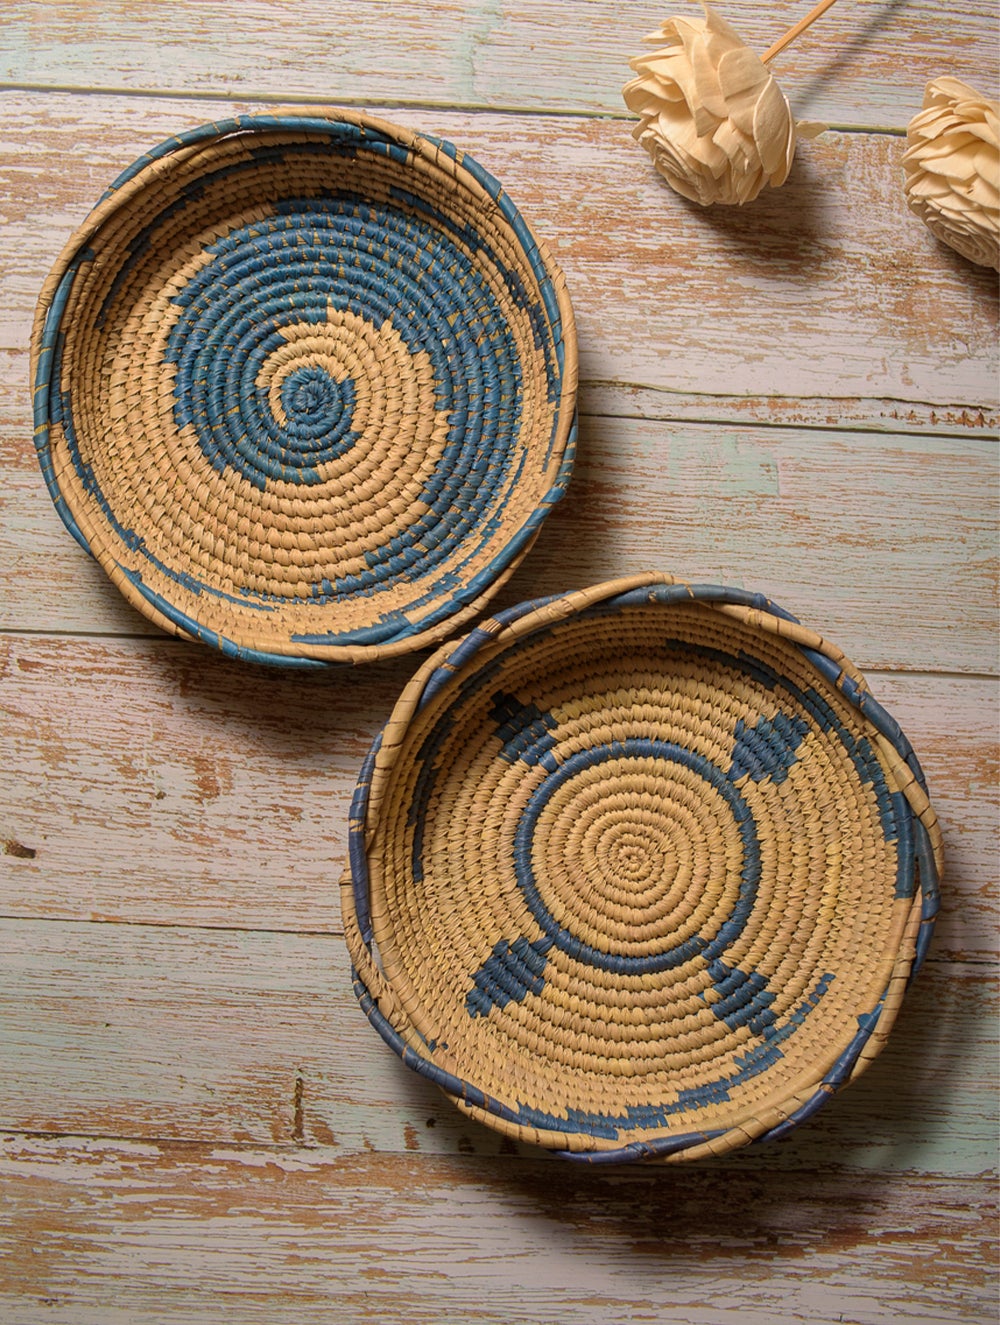 Load image into Gallery viewer, Handcrafted Khajur &amp; Sabai Utility Baskets - Blue &amp; Beige (Set of 2)